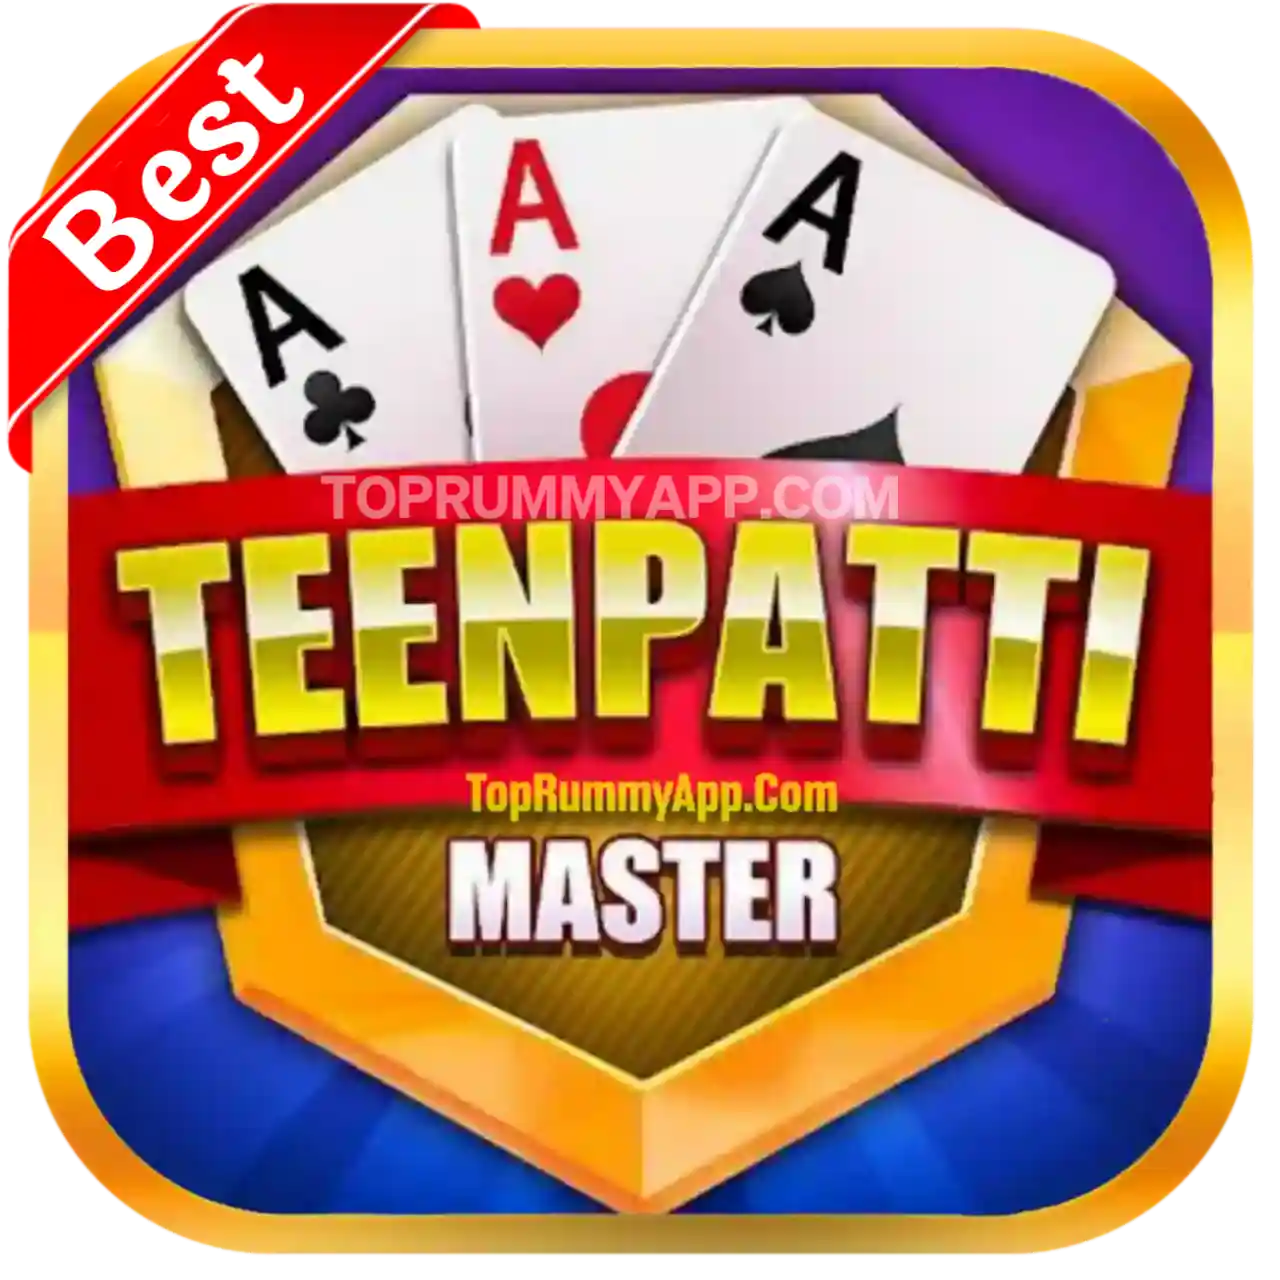 Teen Patti Master Apk Download - Top 20 Rummy Apps List